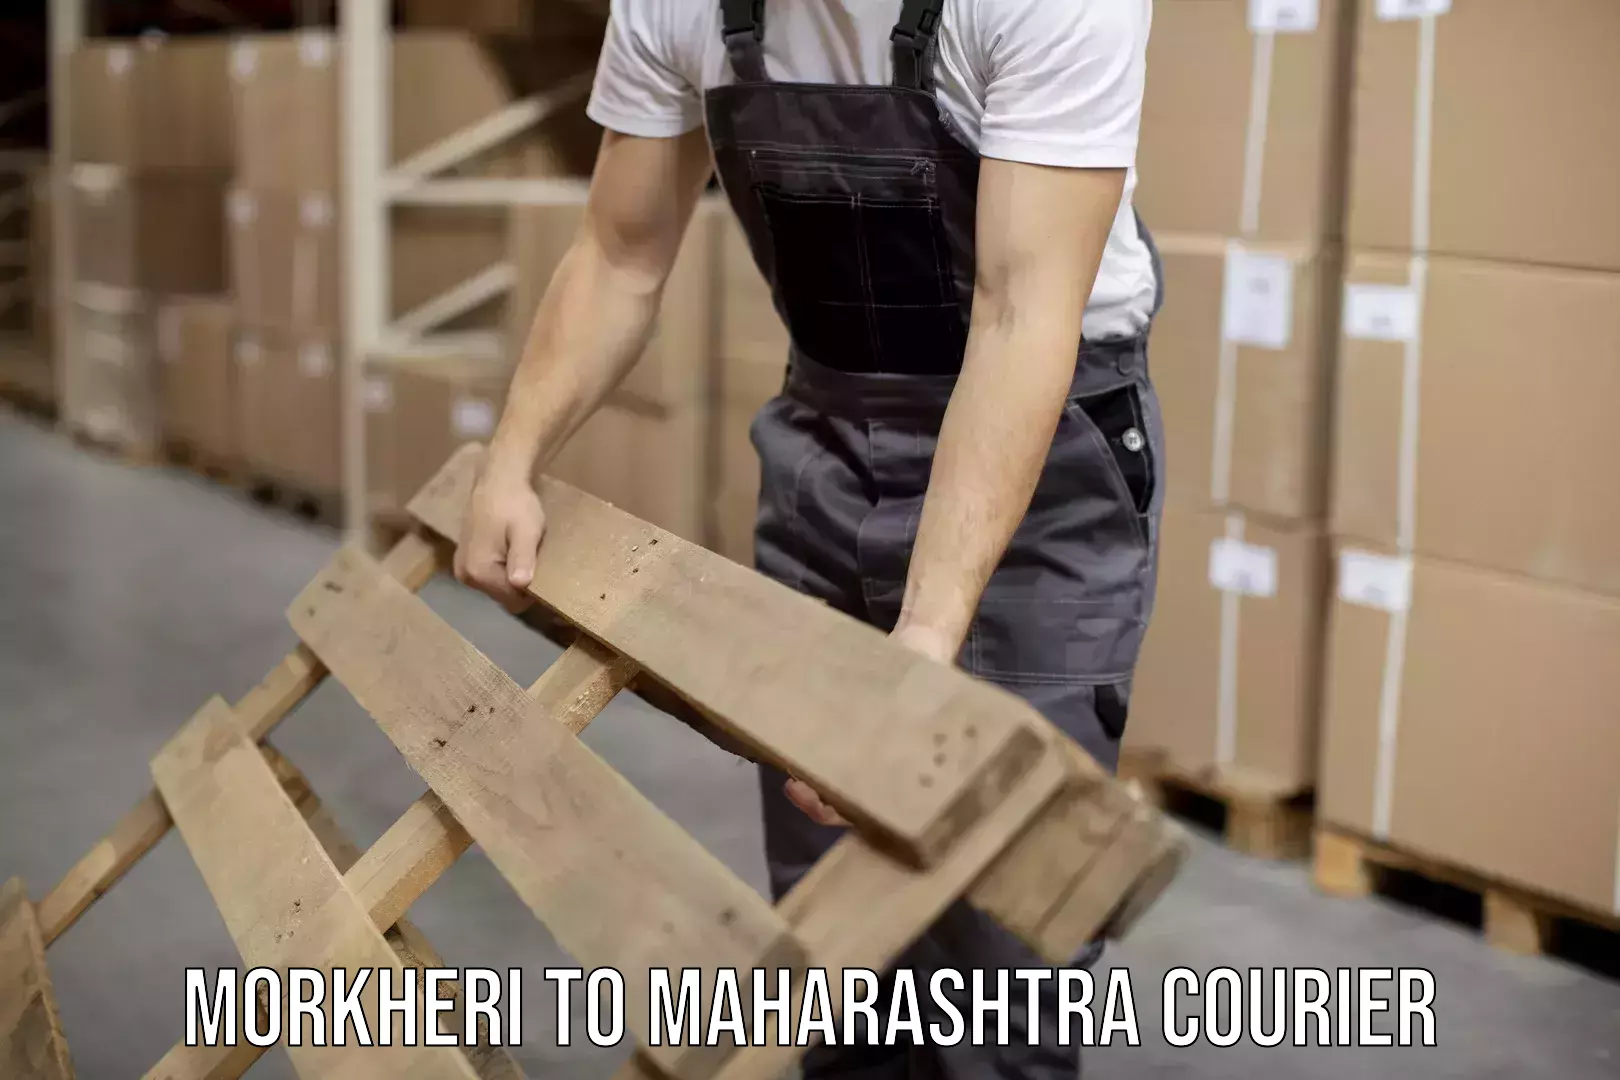 Courier service innovation Morkheri to Maharashtra